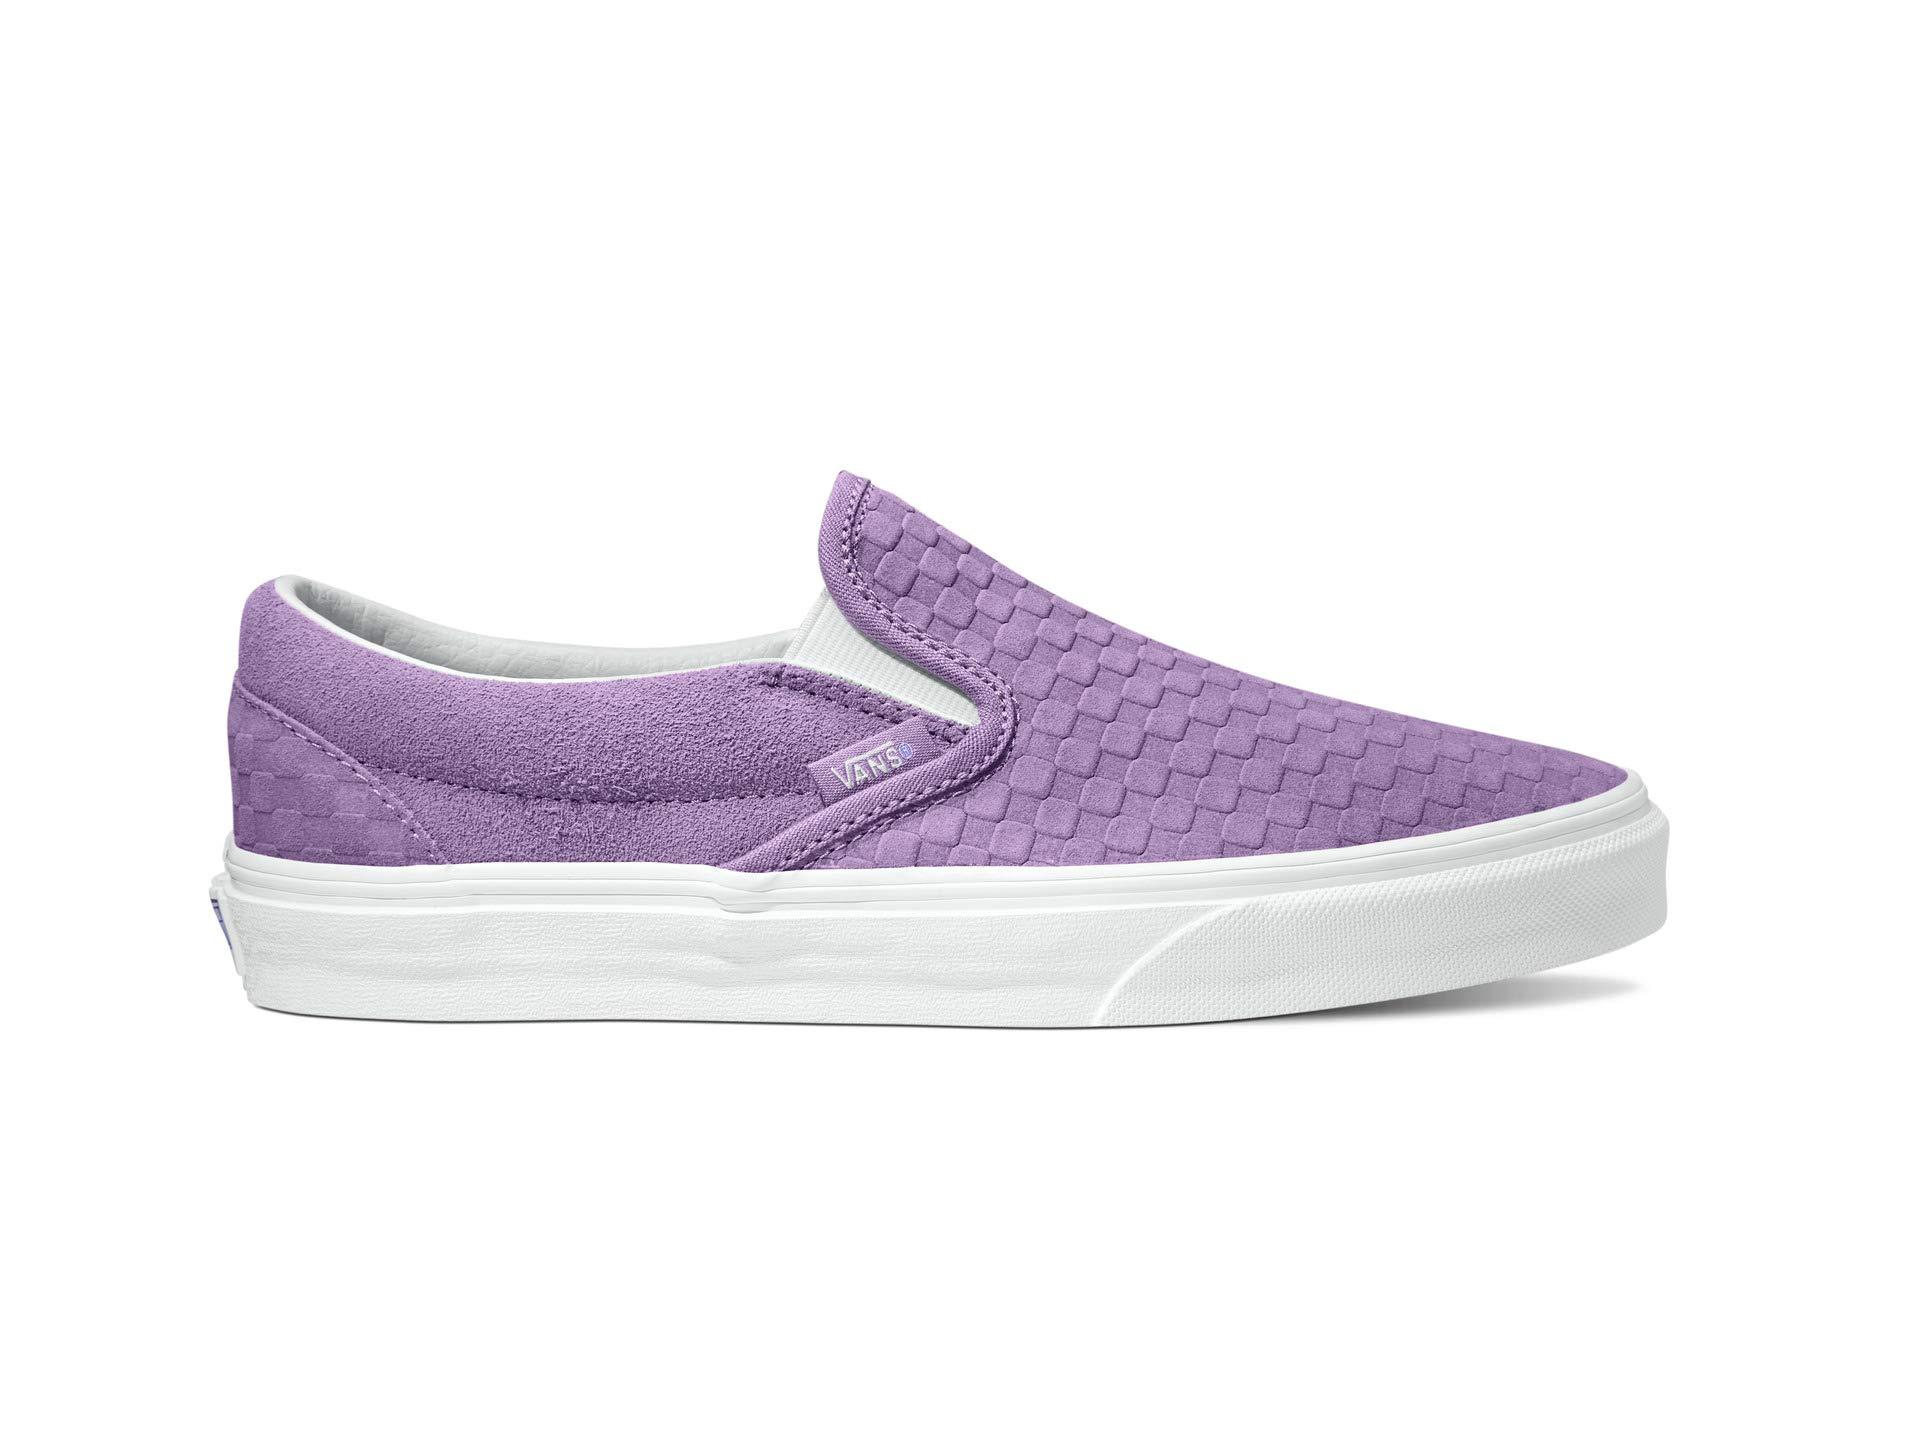 Vans Canvas Classic Slip-ontm in Purple - Save 17% - Lyst